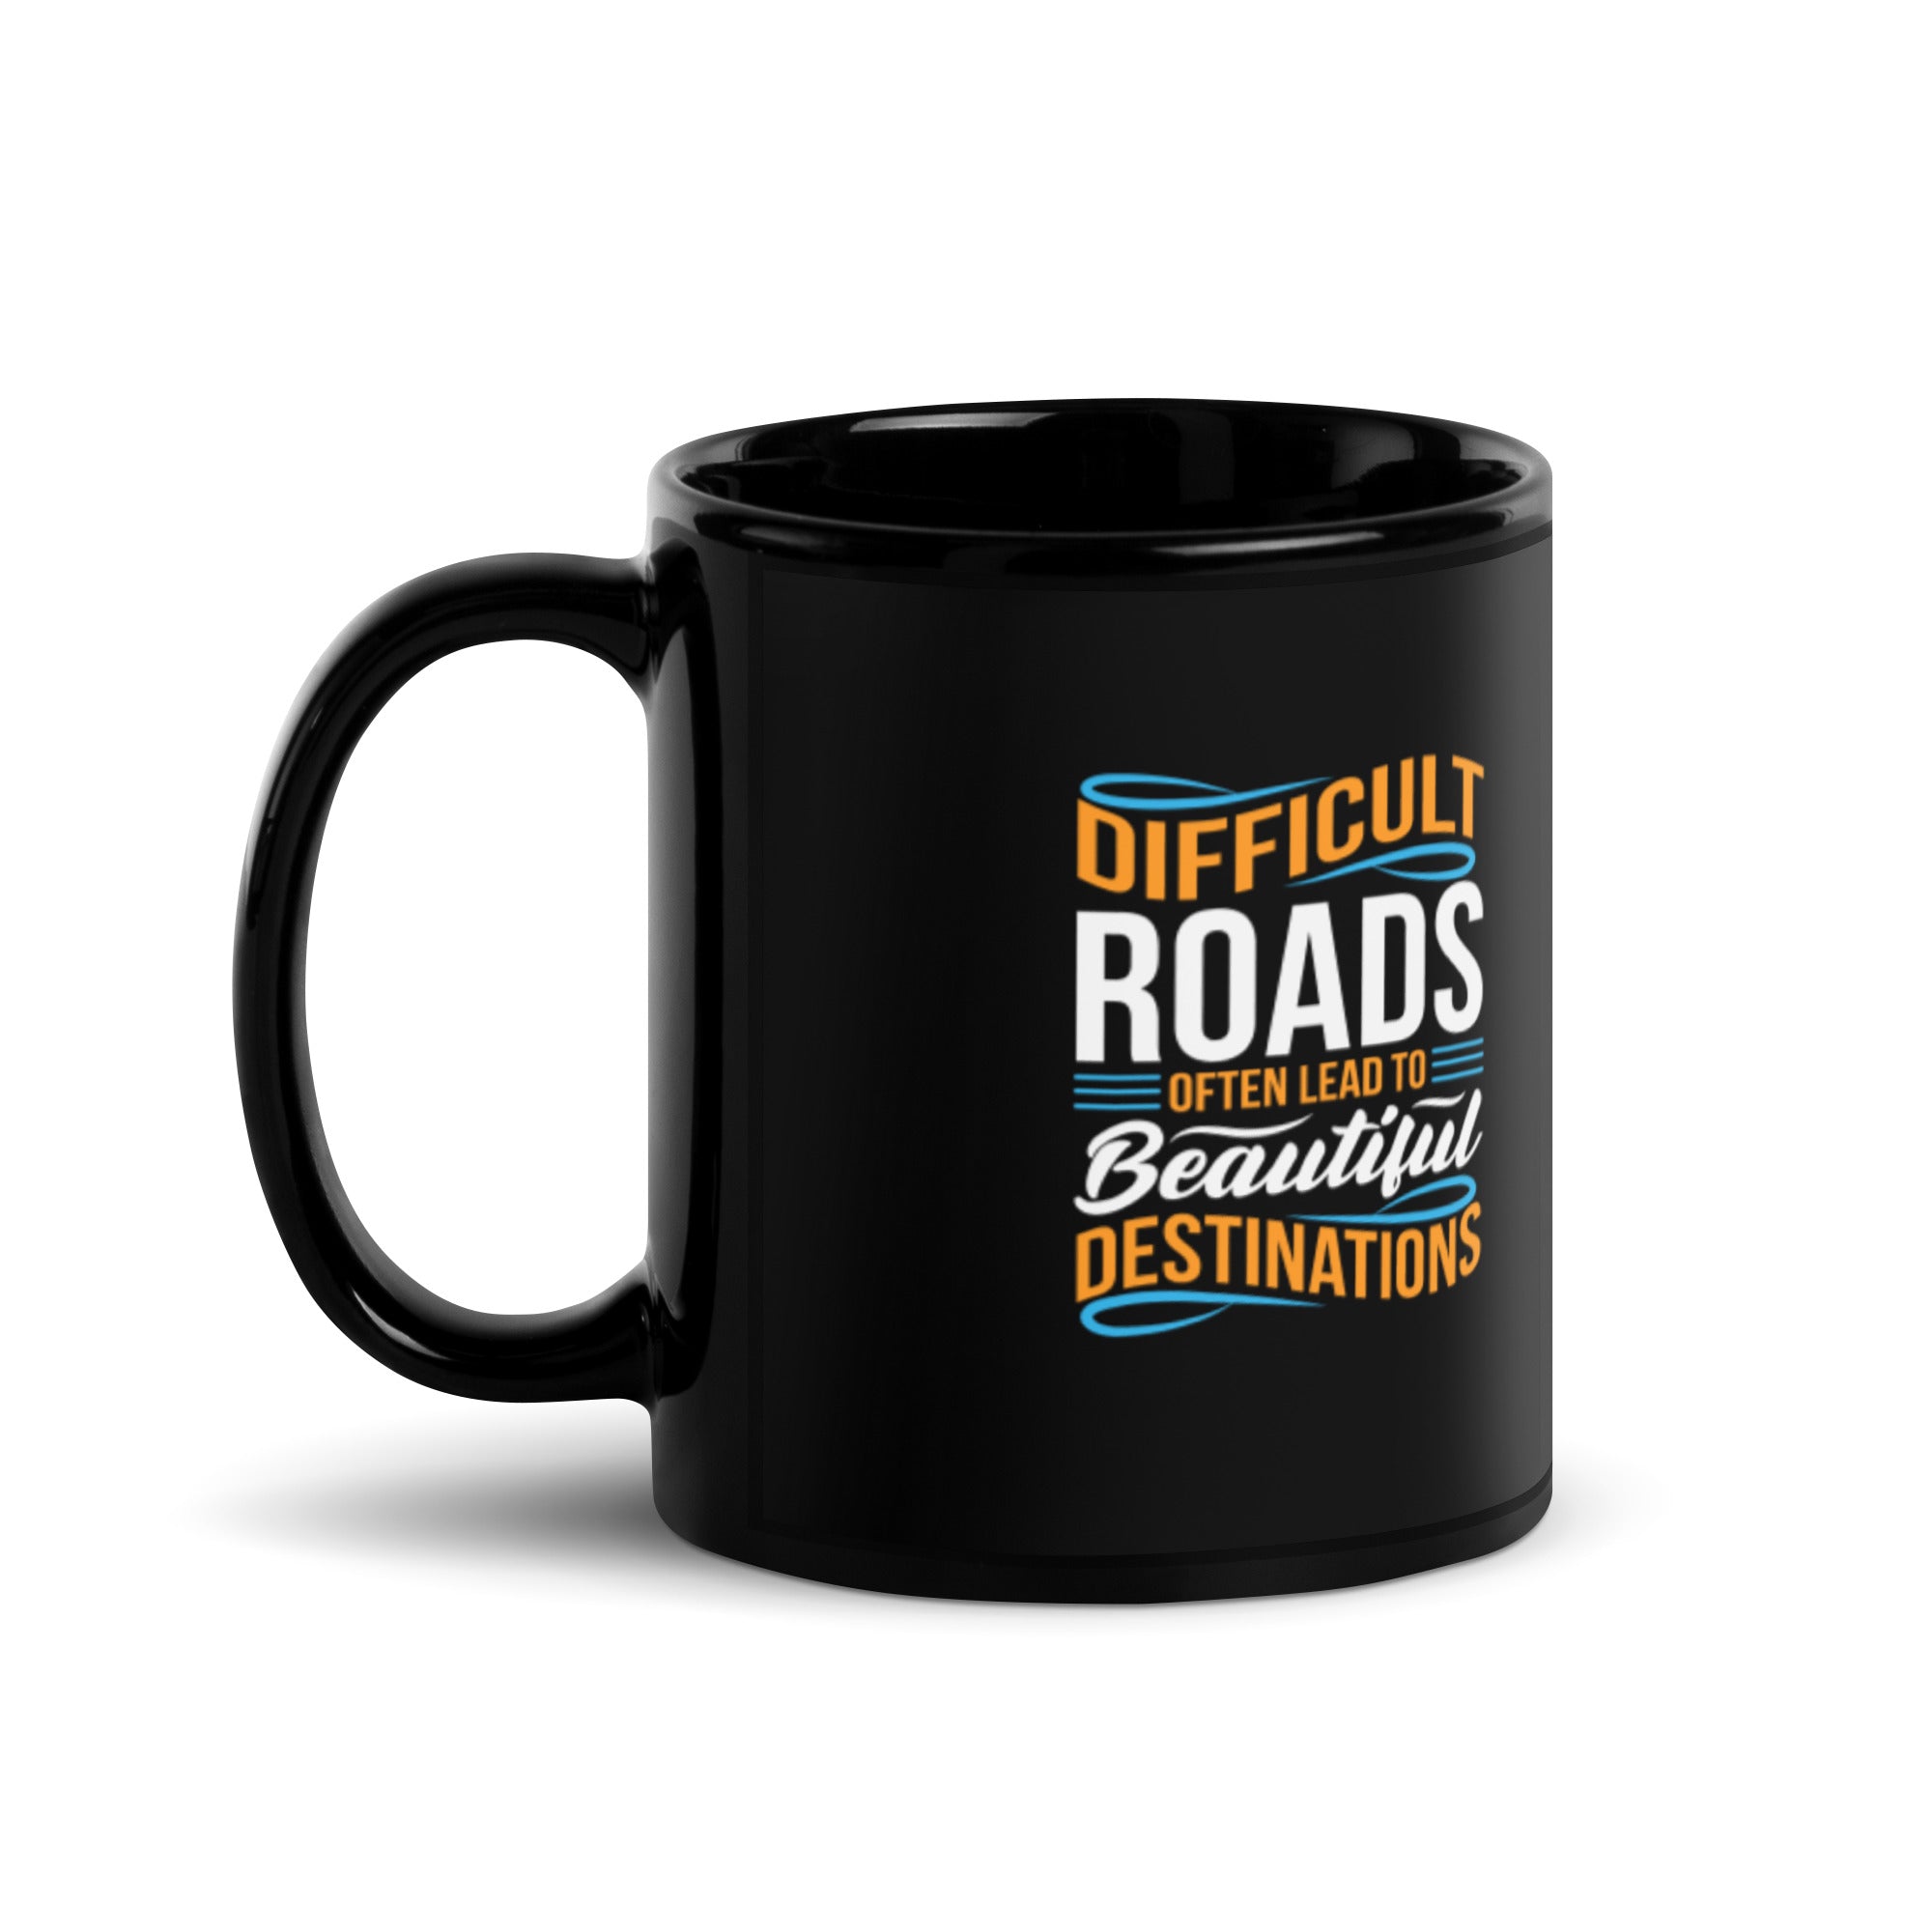 Difficult Roads Often Lead To Beautiful Destinations - Black Glossy Mug